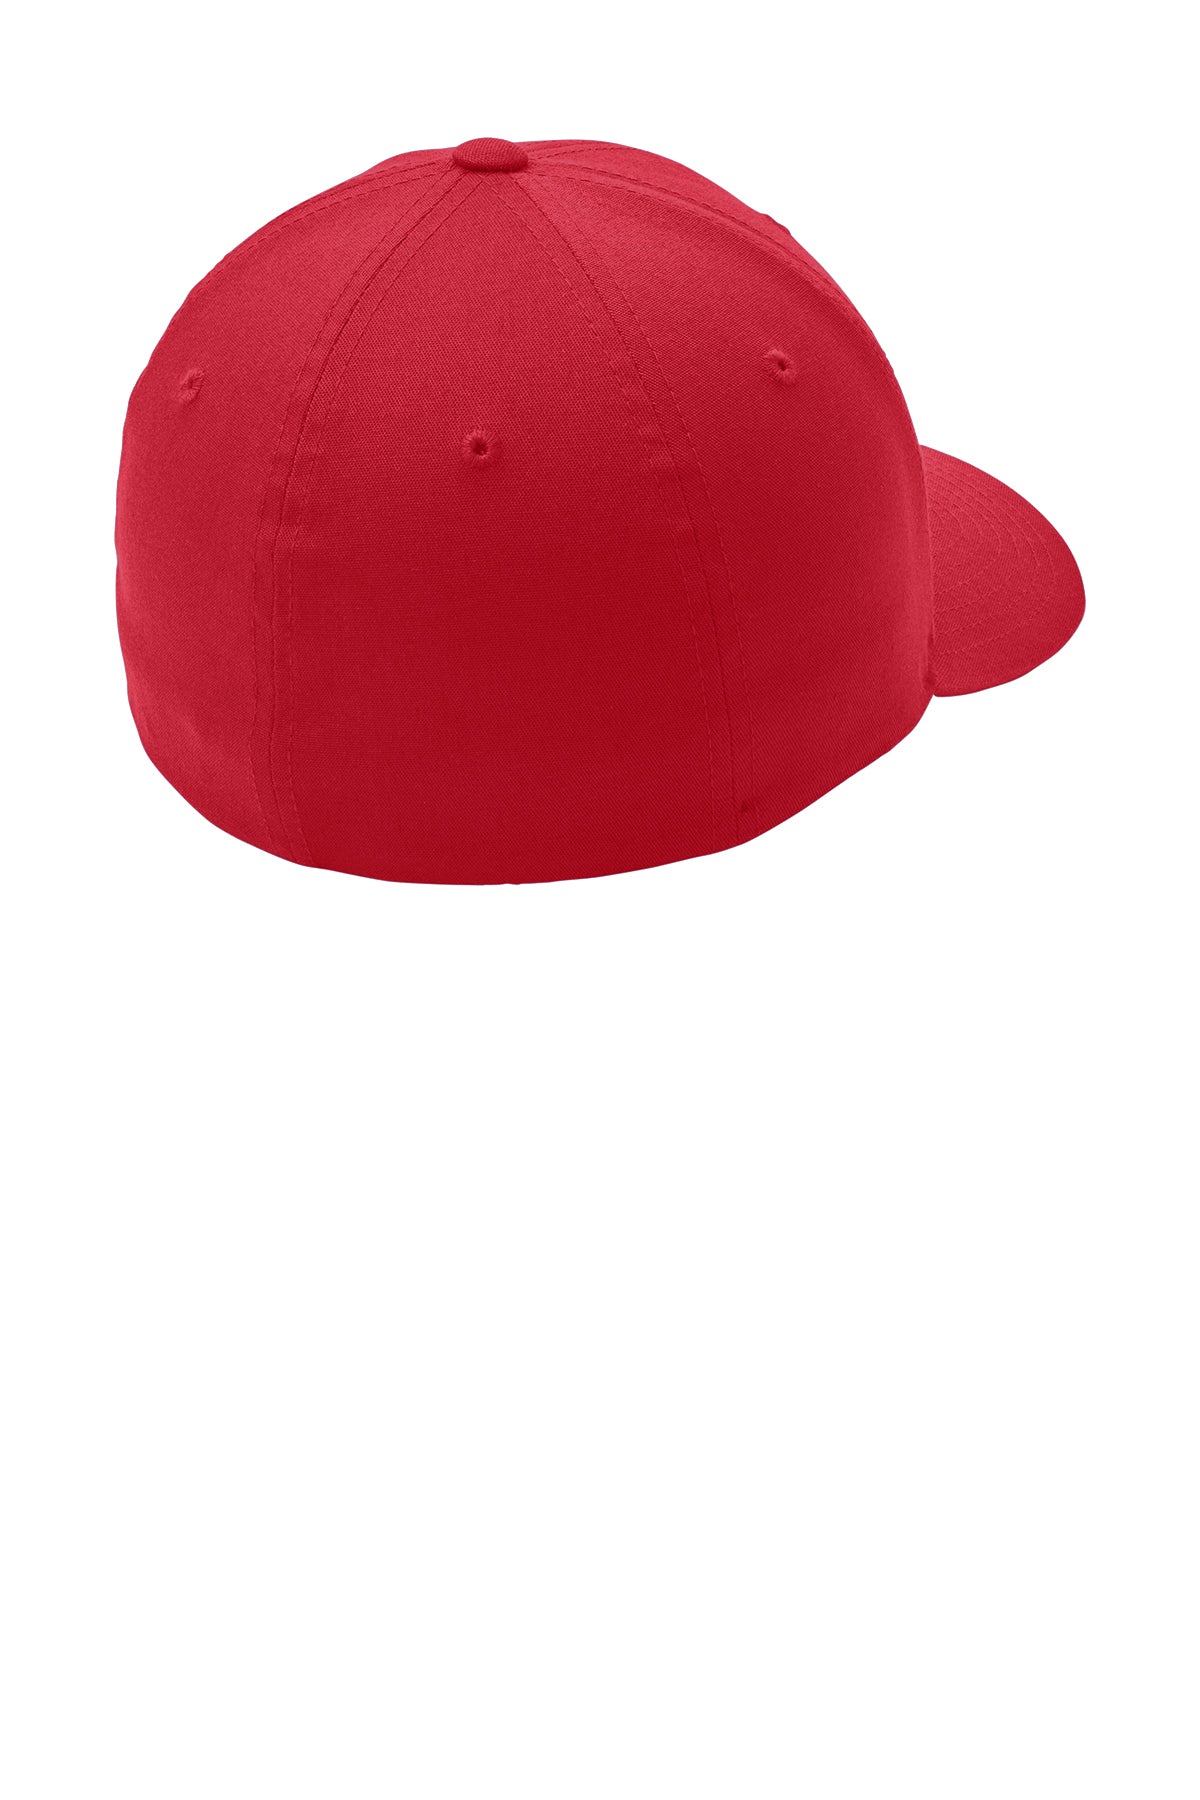 Port Authority Flexfit Cotton Twill Customized Caps, True Red